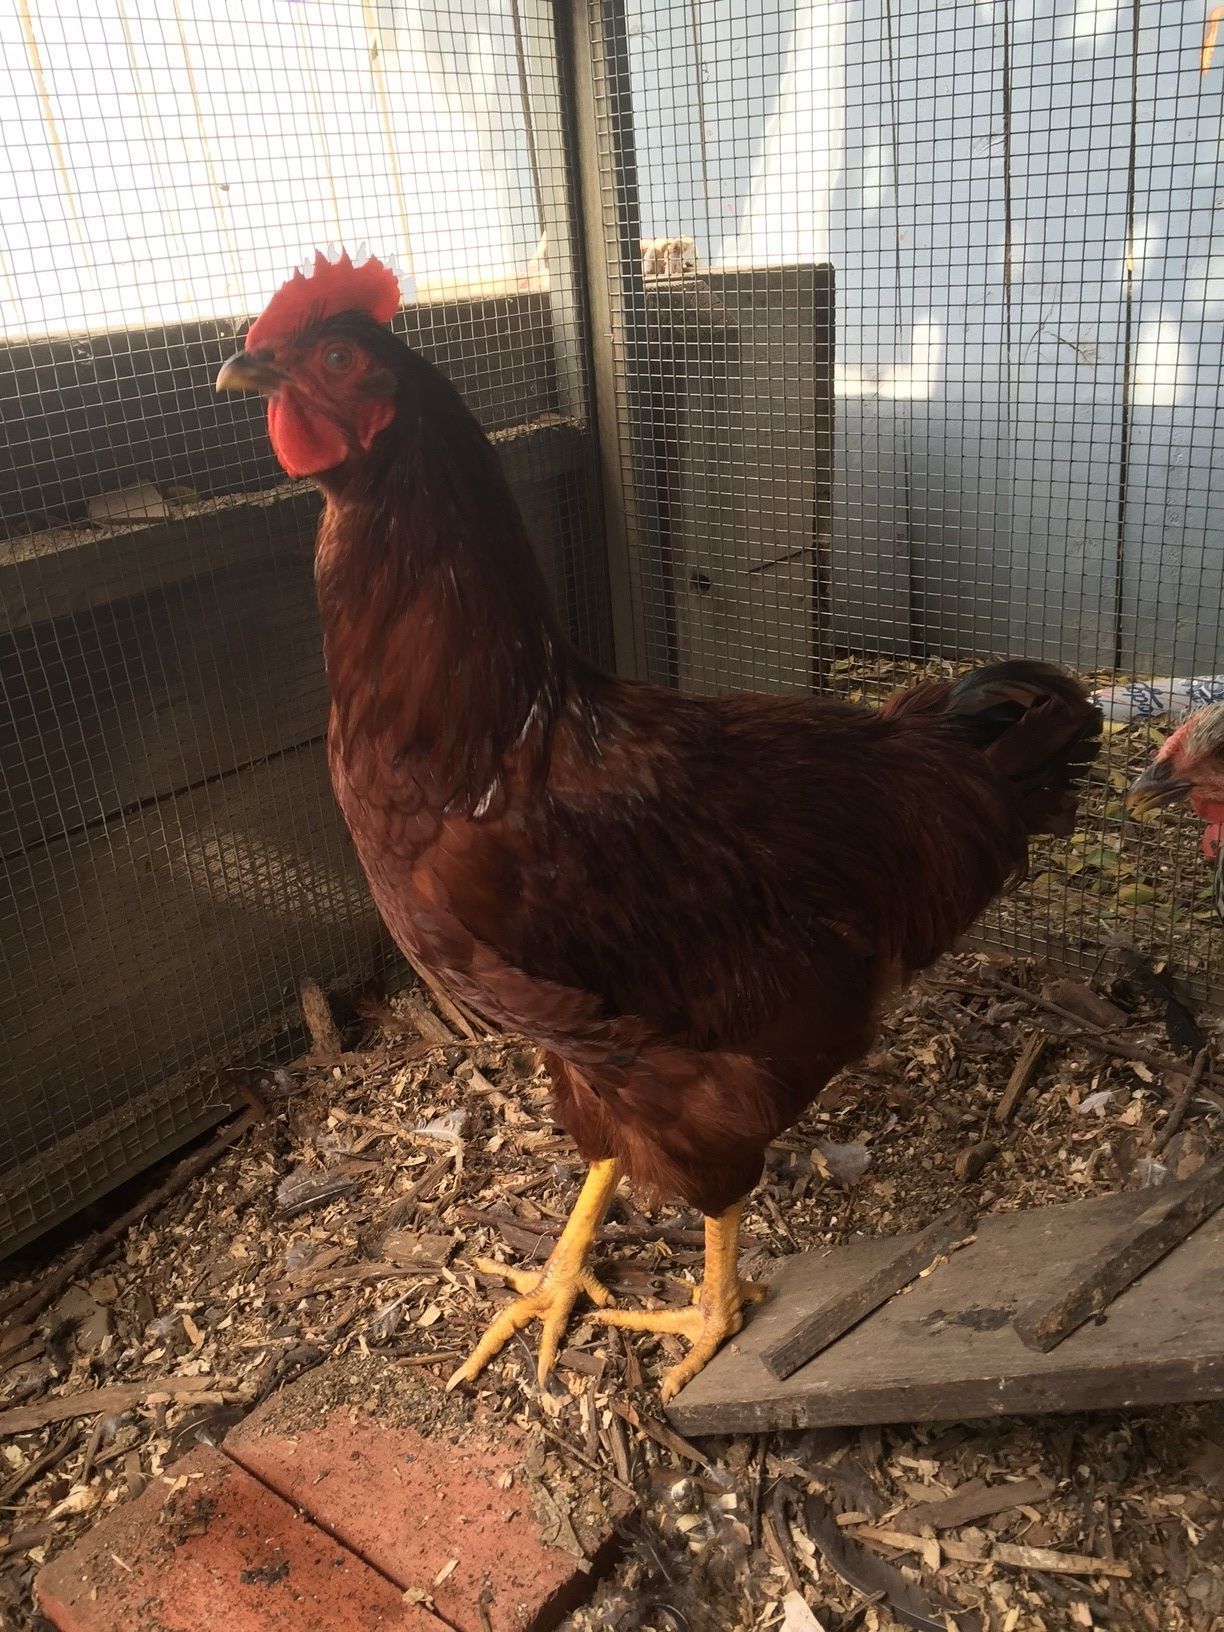 18 week old RIR - Pullet or Rooster? | BackYard Chickens